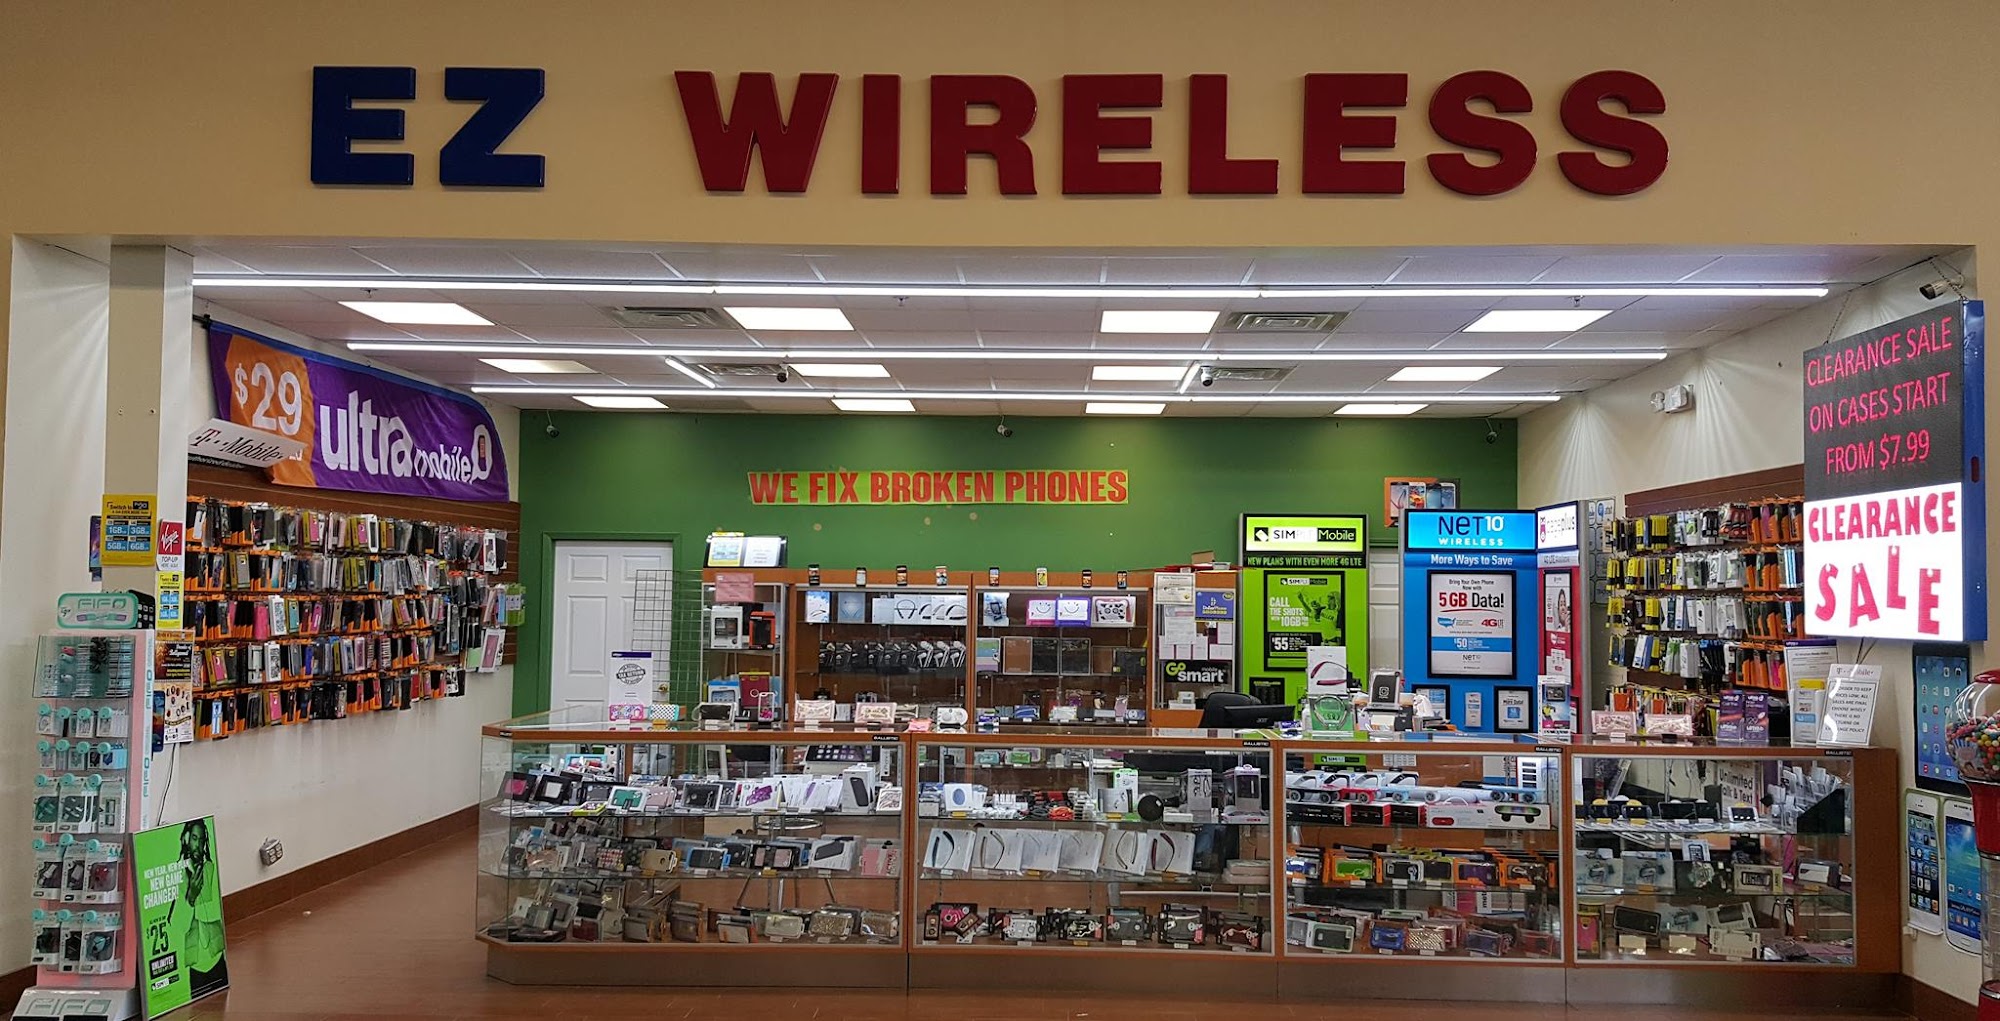 EZ Wireless(Phone Repair) INSIDE HEB